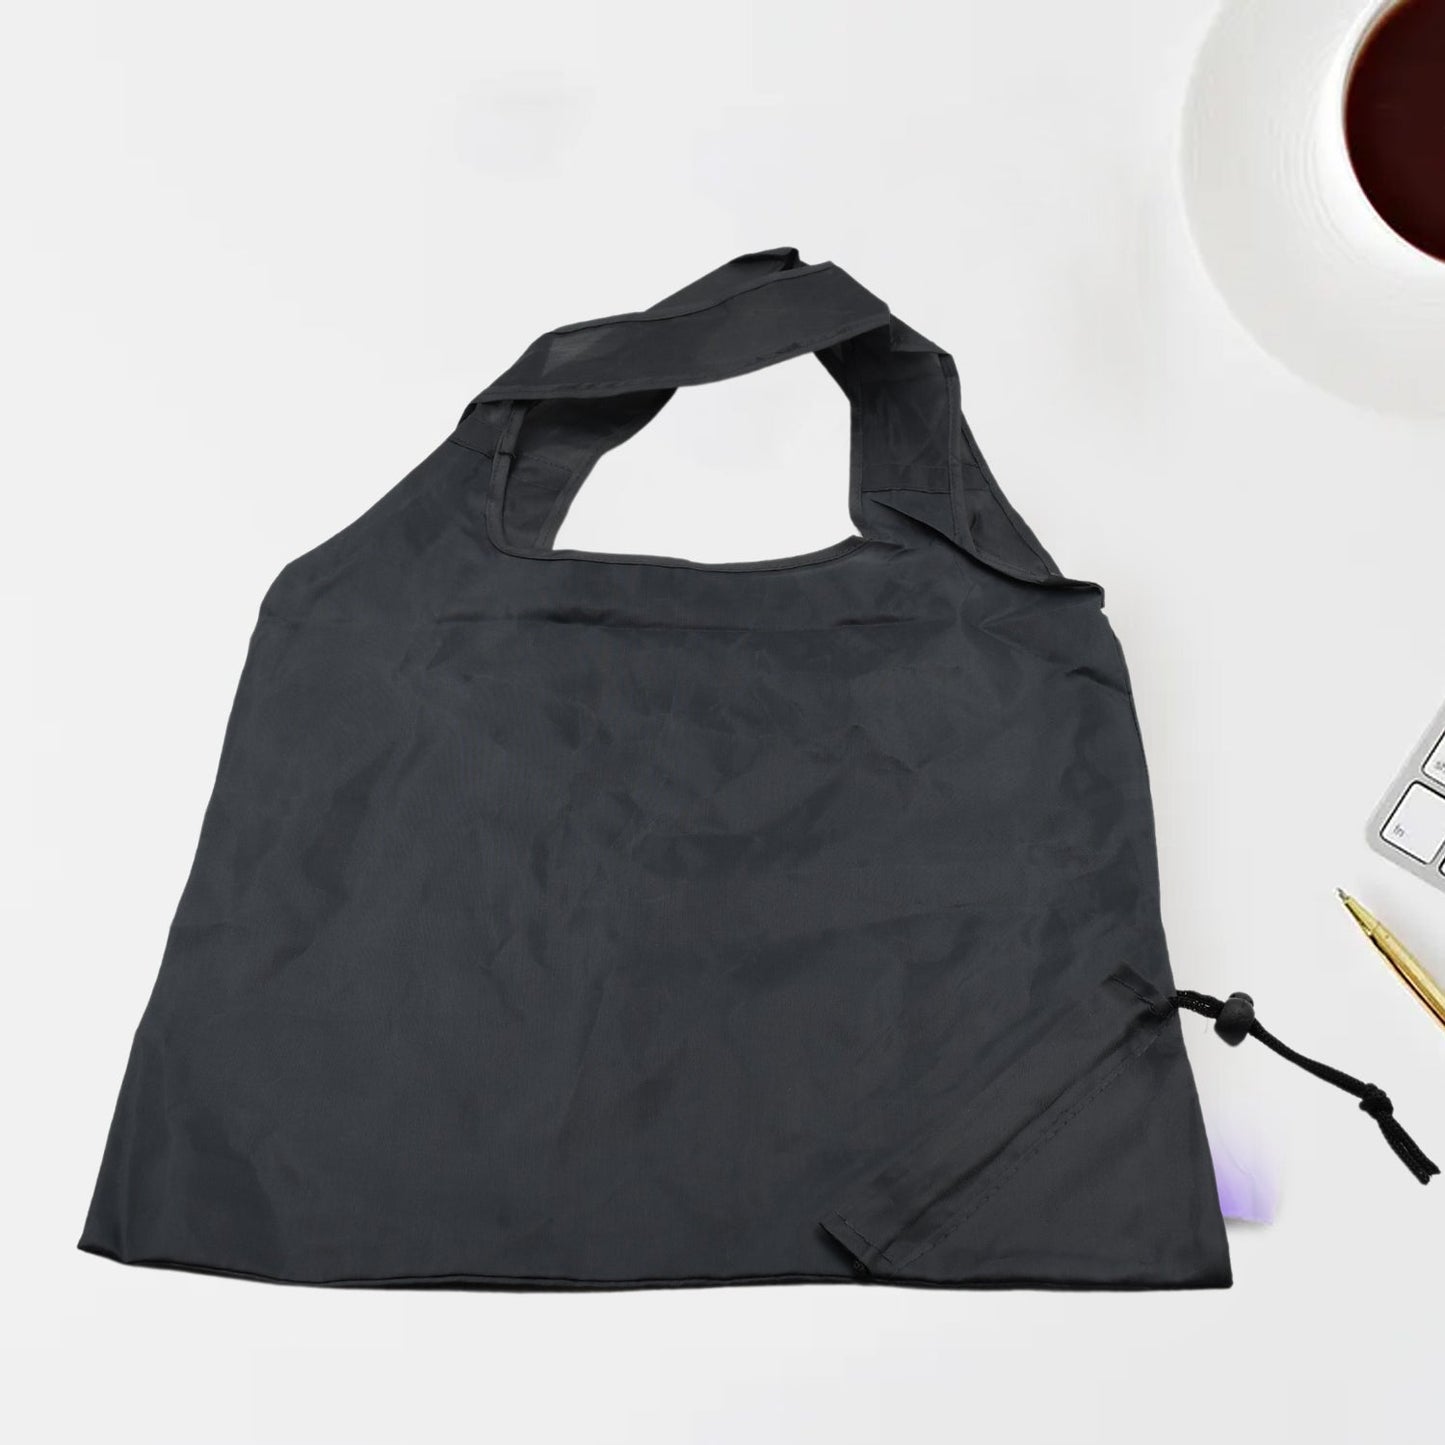 7737 Reusable Grocery Bags - Reusable Bags With Handles - Washable Reusable Shopping Bags Foldable